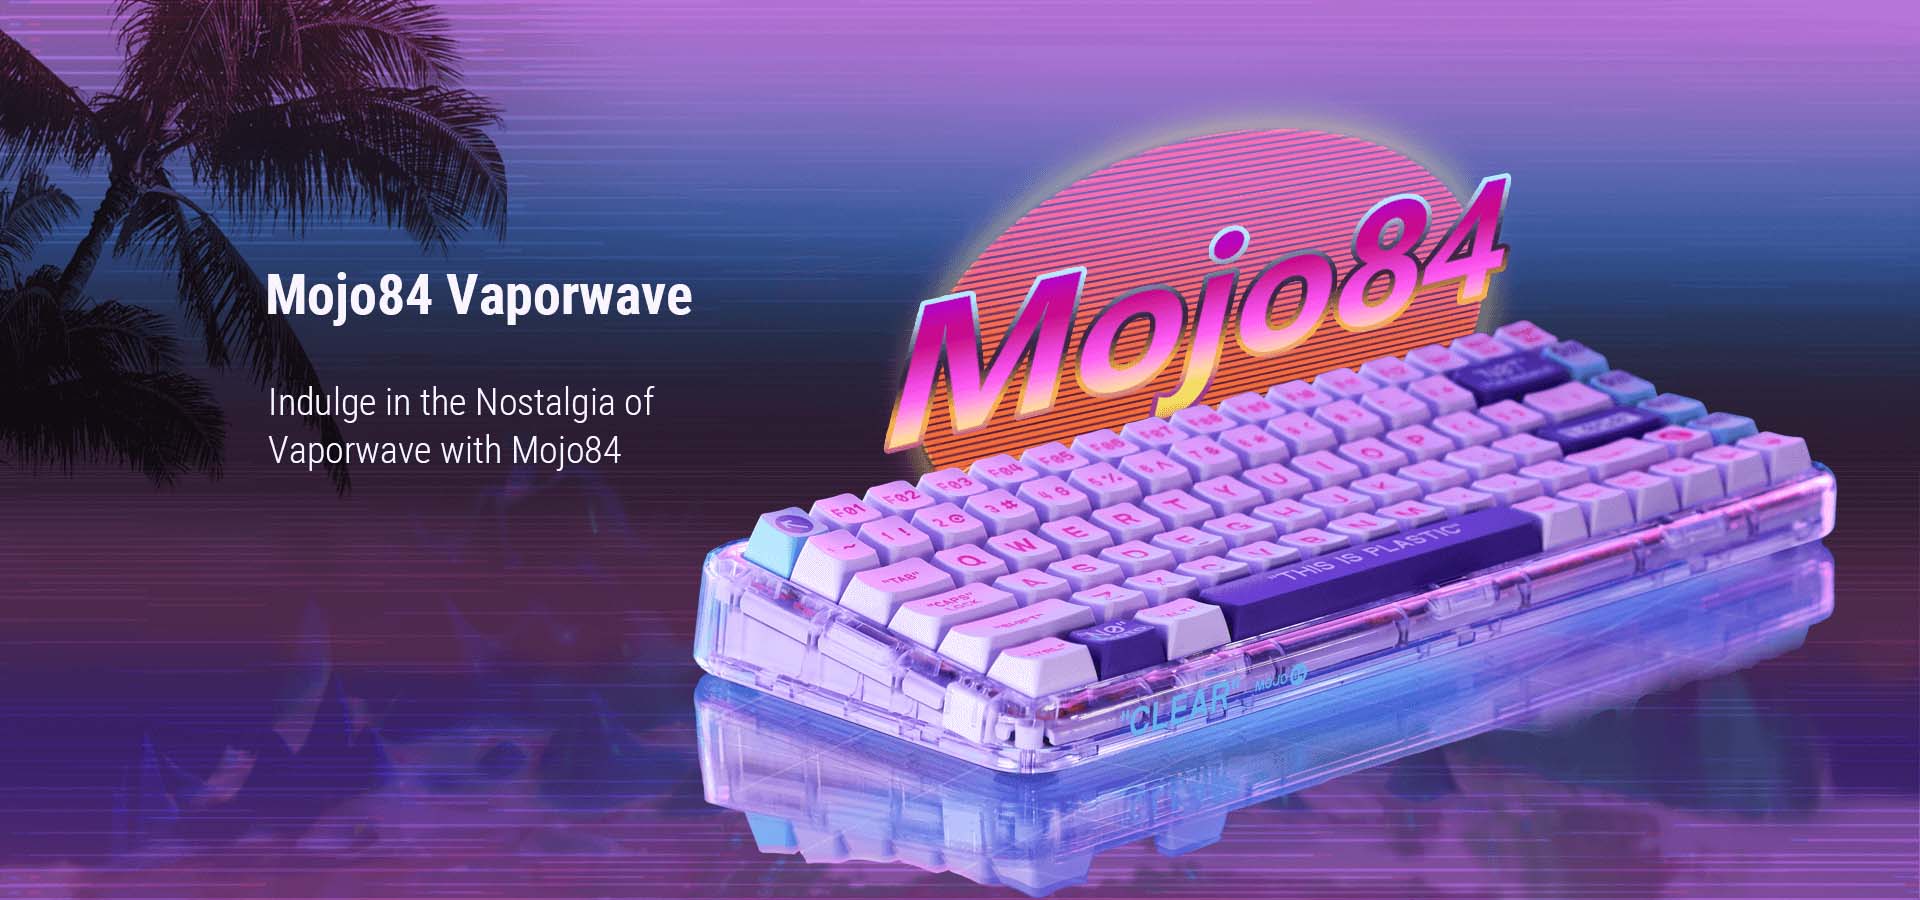 Best Mechanical Gaming Keyboard